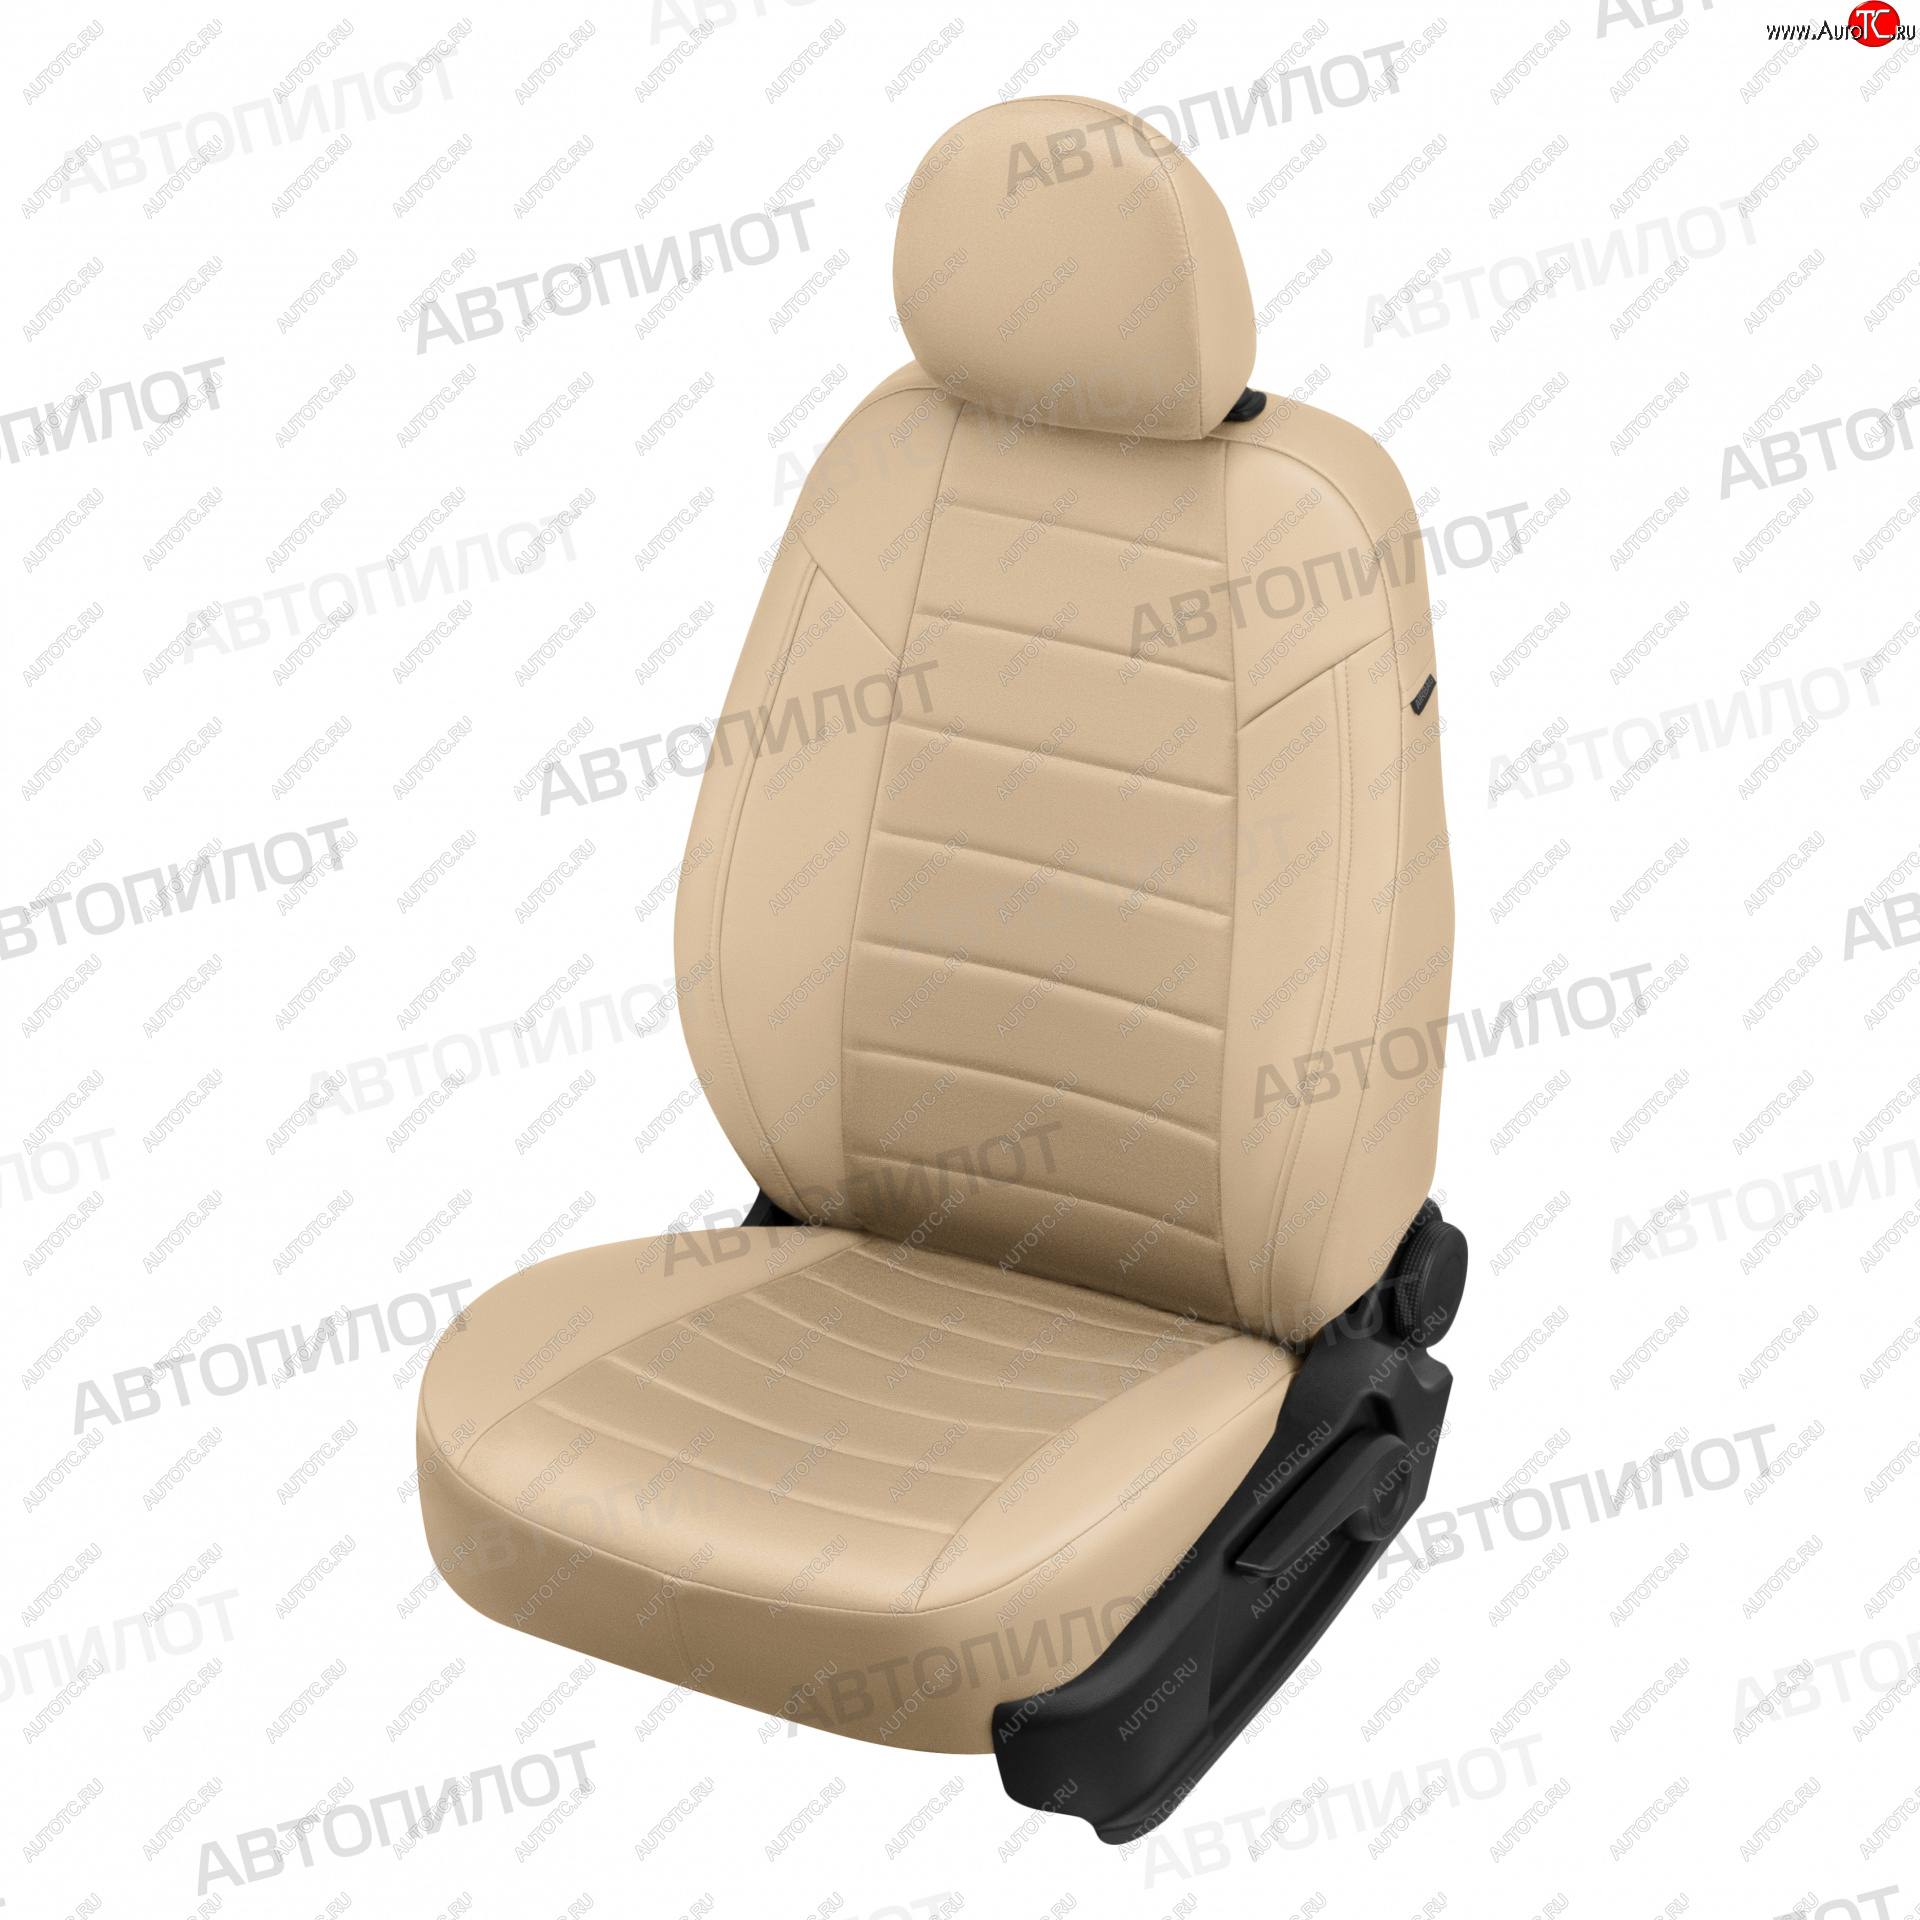 13 449 р. Чехлы сидений (экокожа/алькантара) Автопилот Hyundai Sonata EF рестайлинг ТагАЗ (2001-2013) (бежевый)